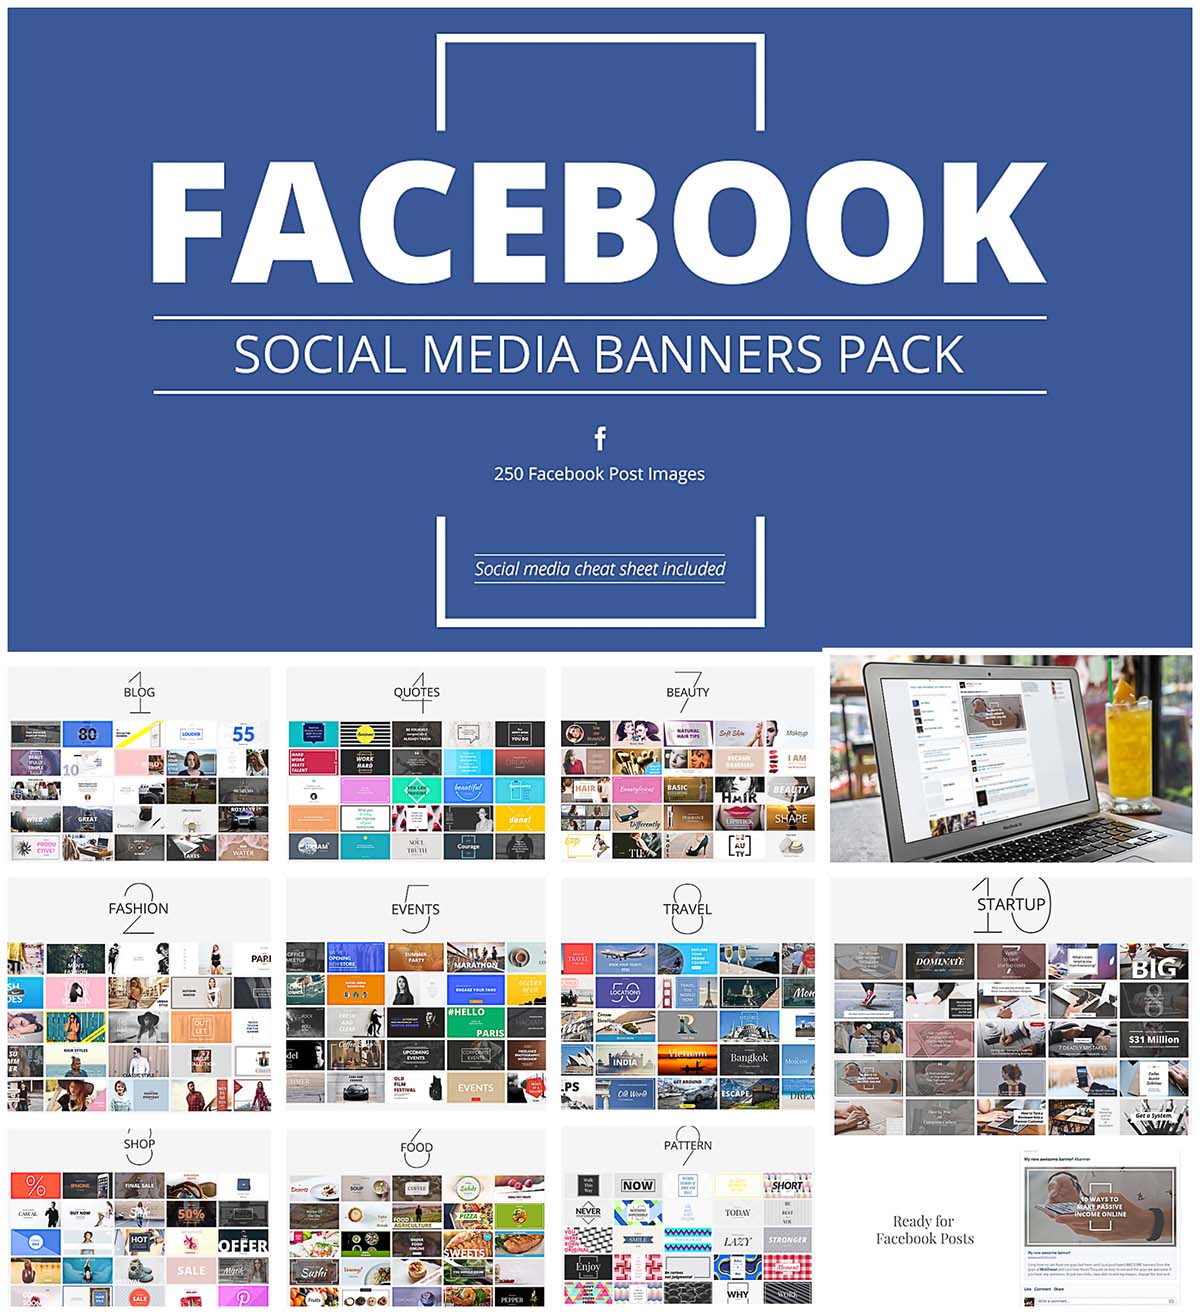 Facebook social media banners